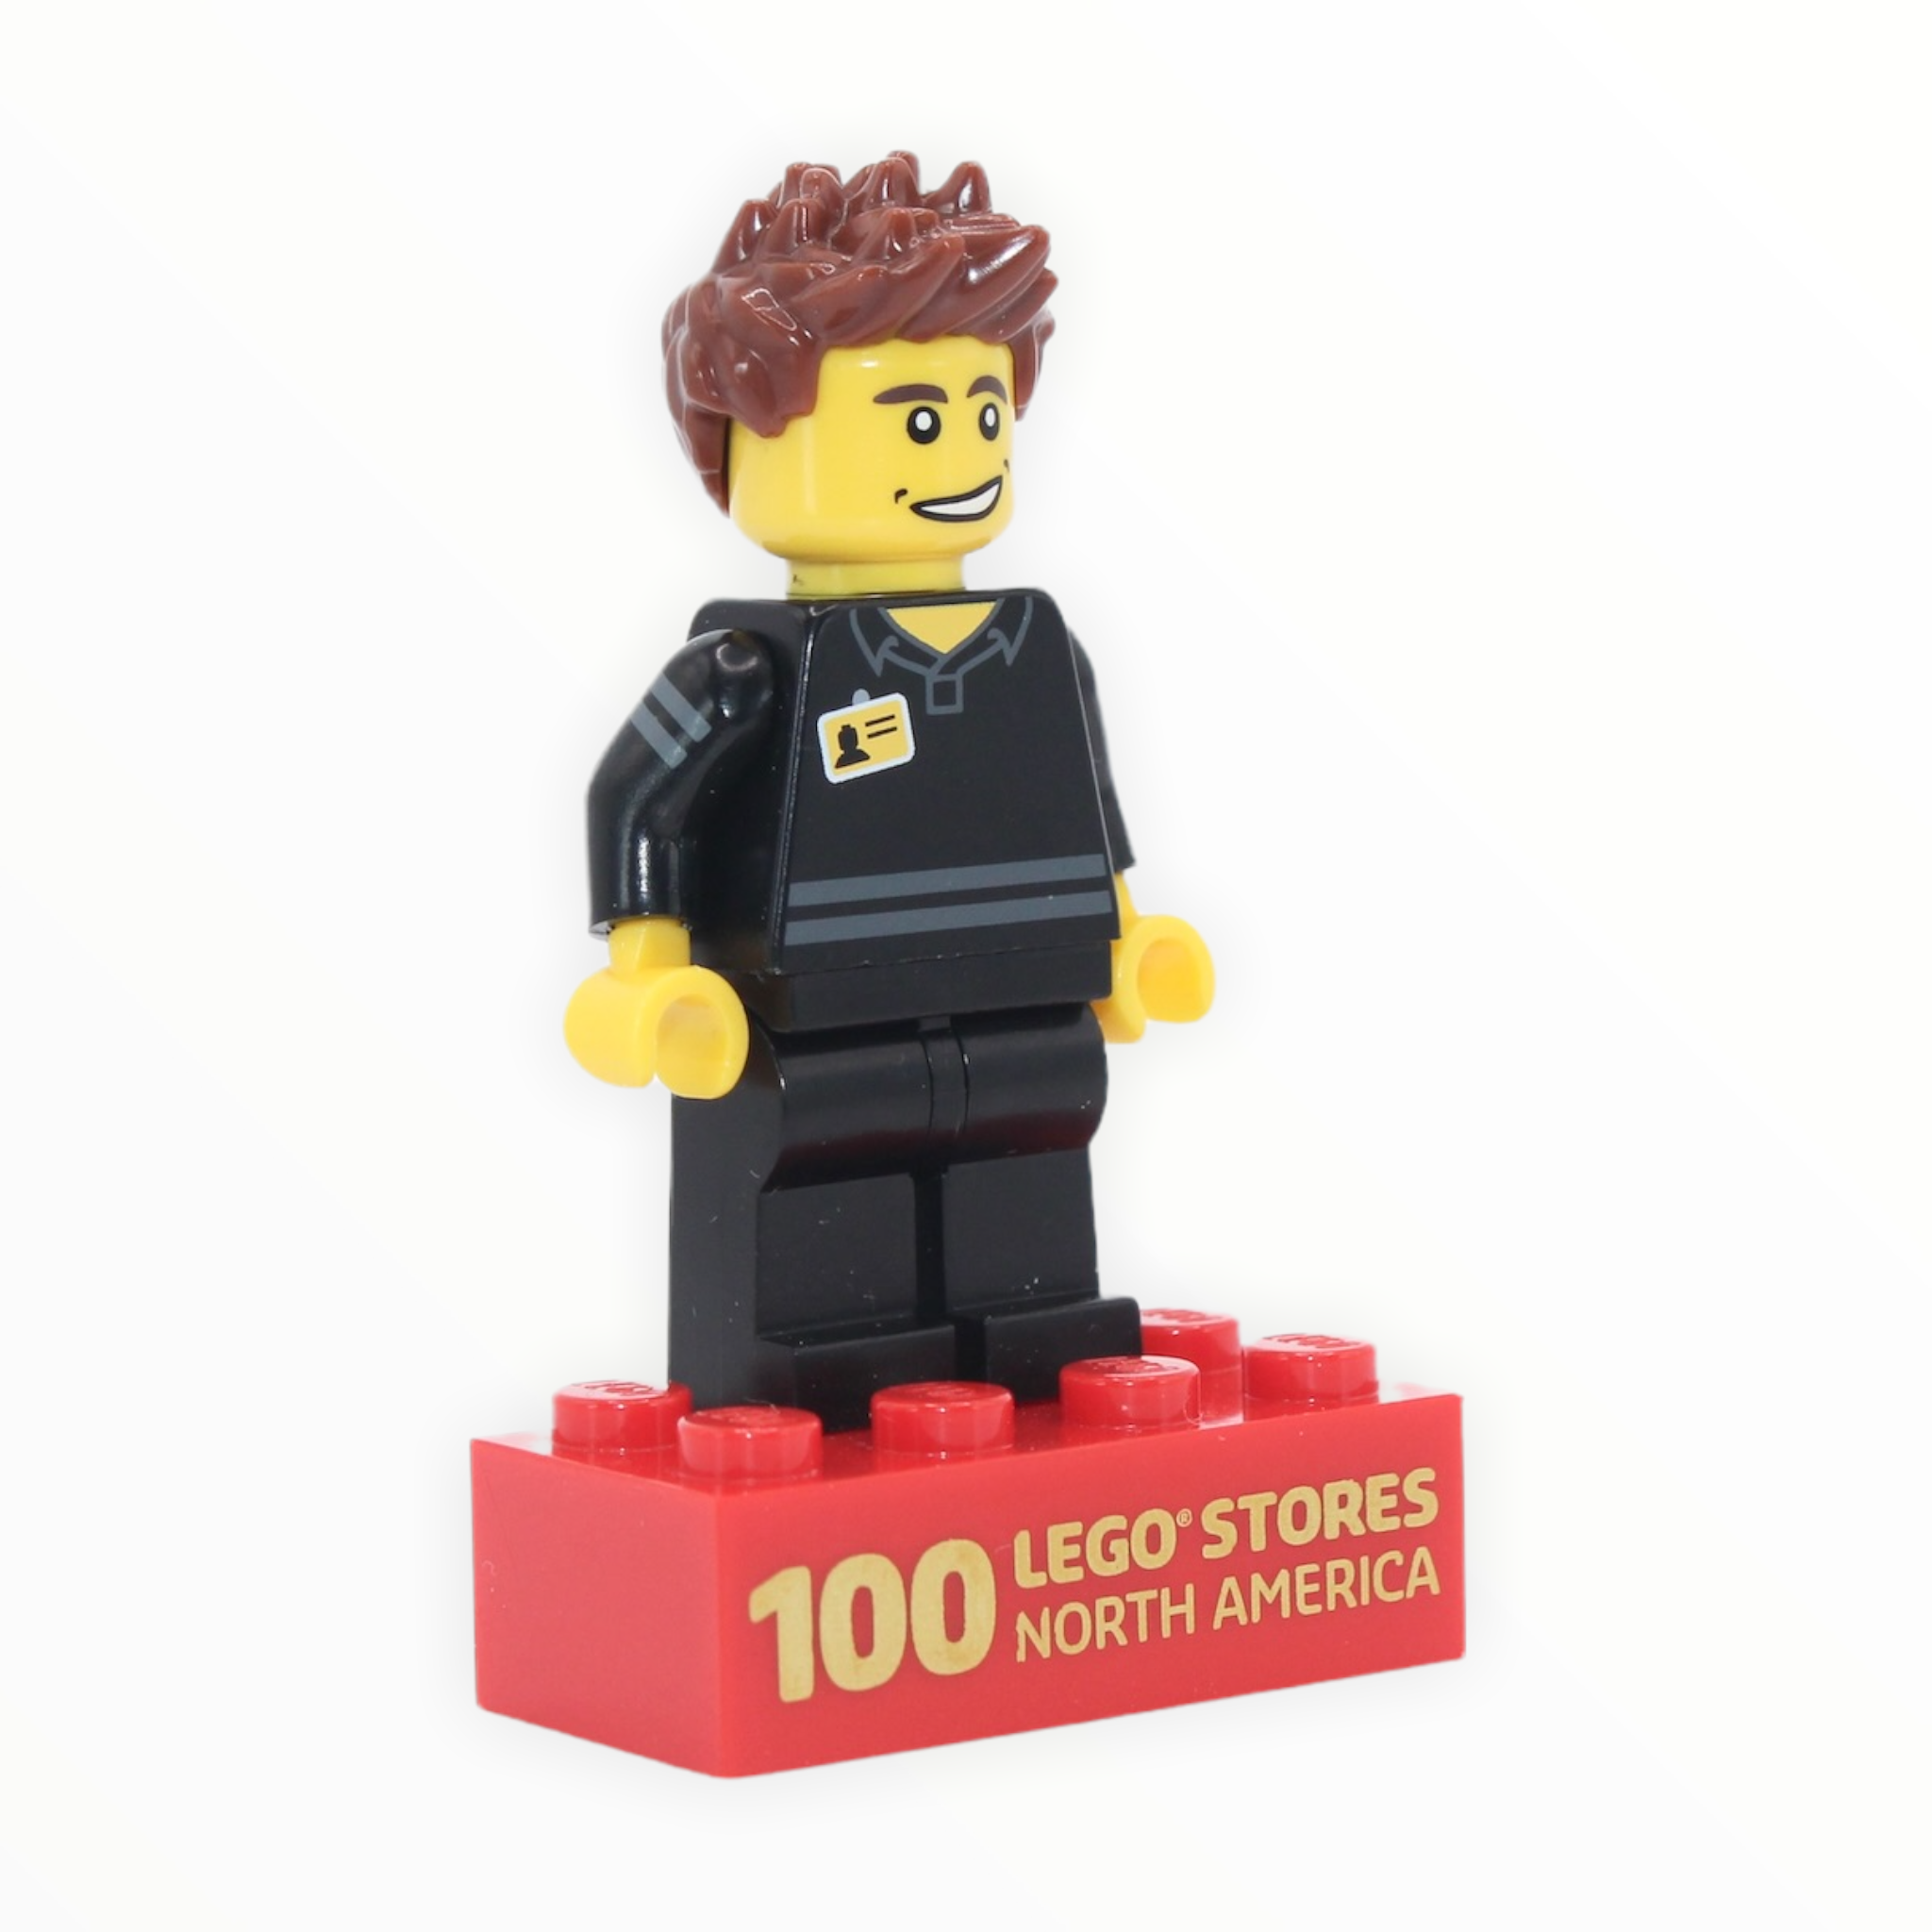 Afrika permeabilitet sammensværgelse LEGO Brand Store Employee with 100 LEGO Stores Brick (100 Stores back